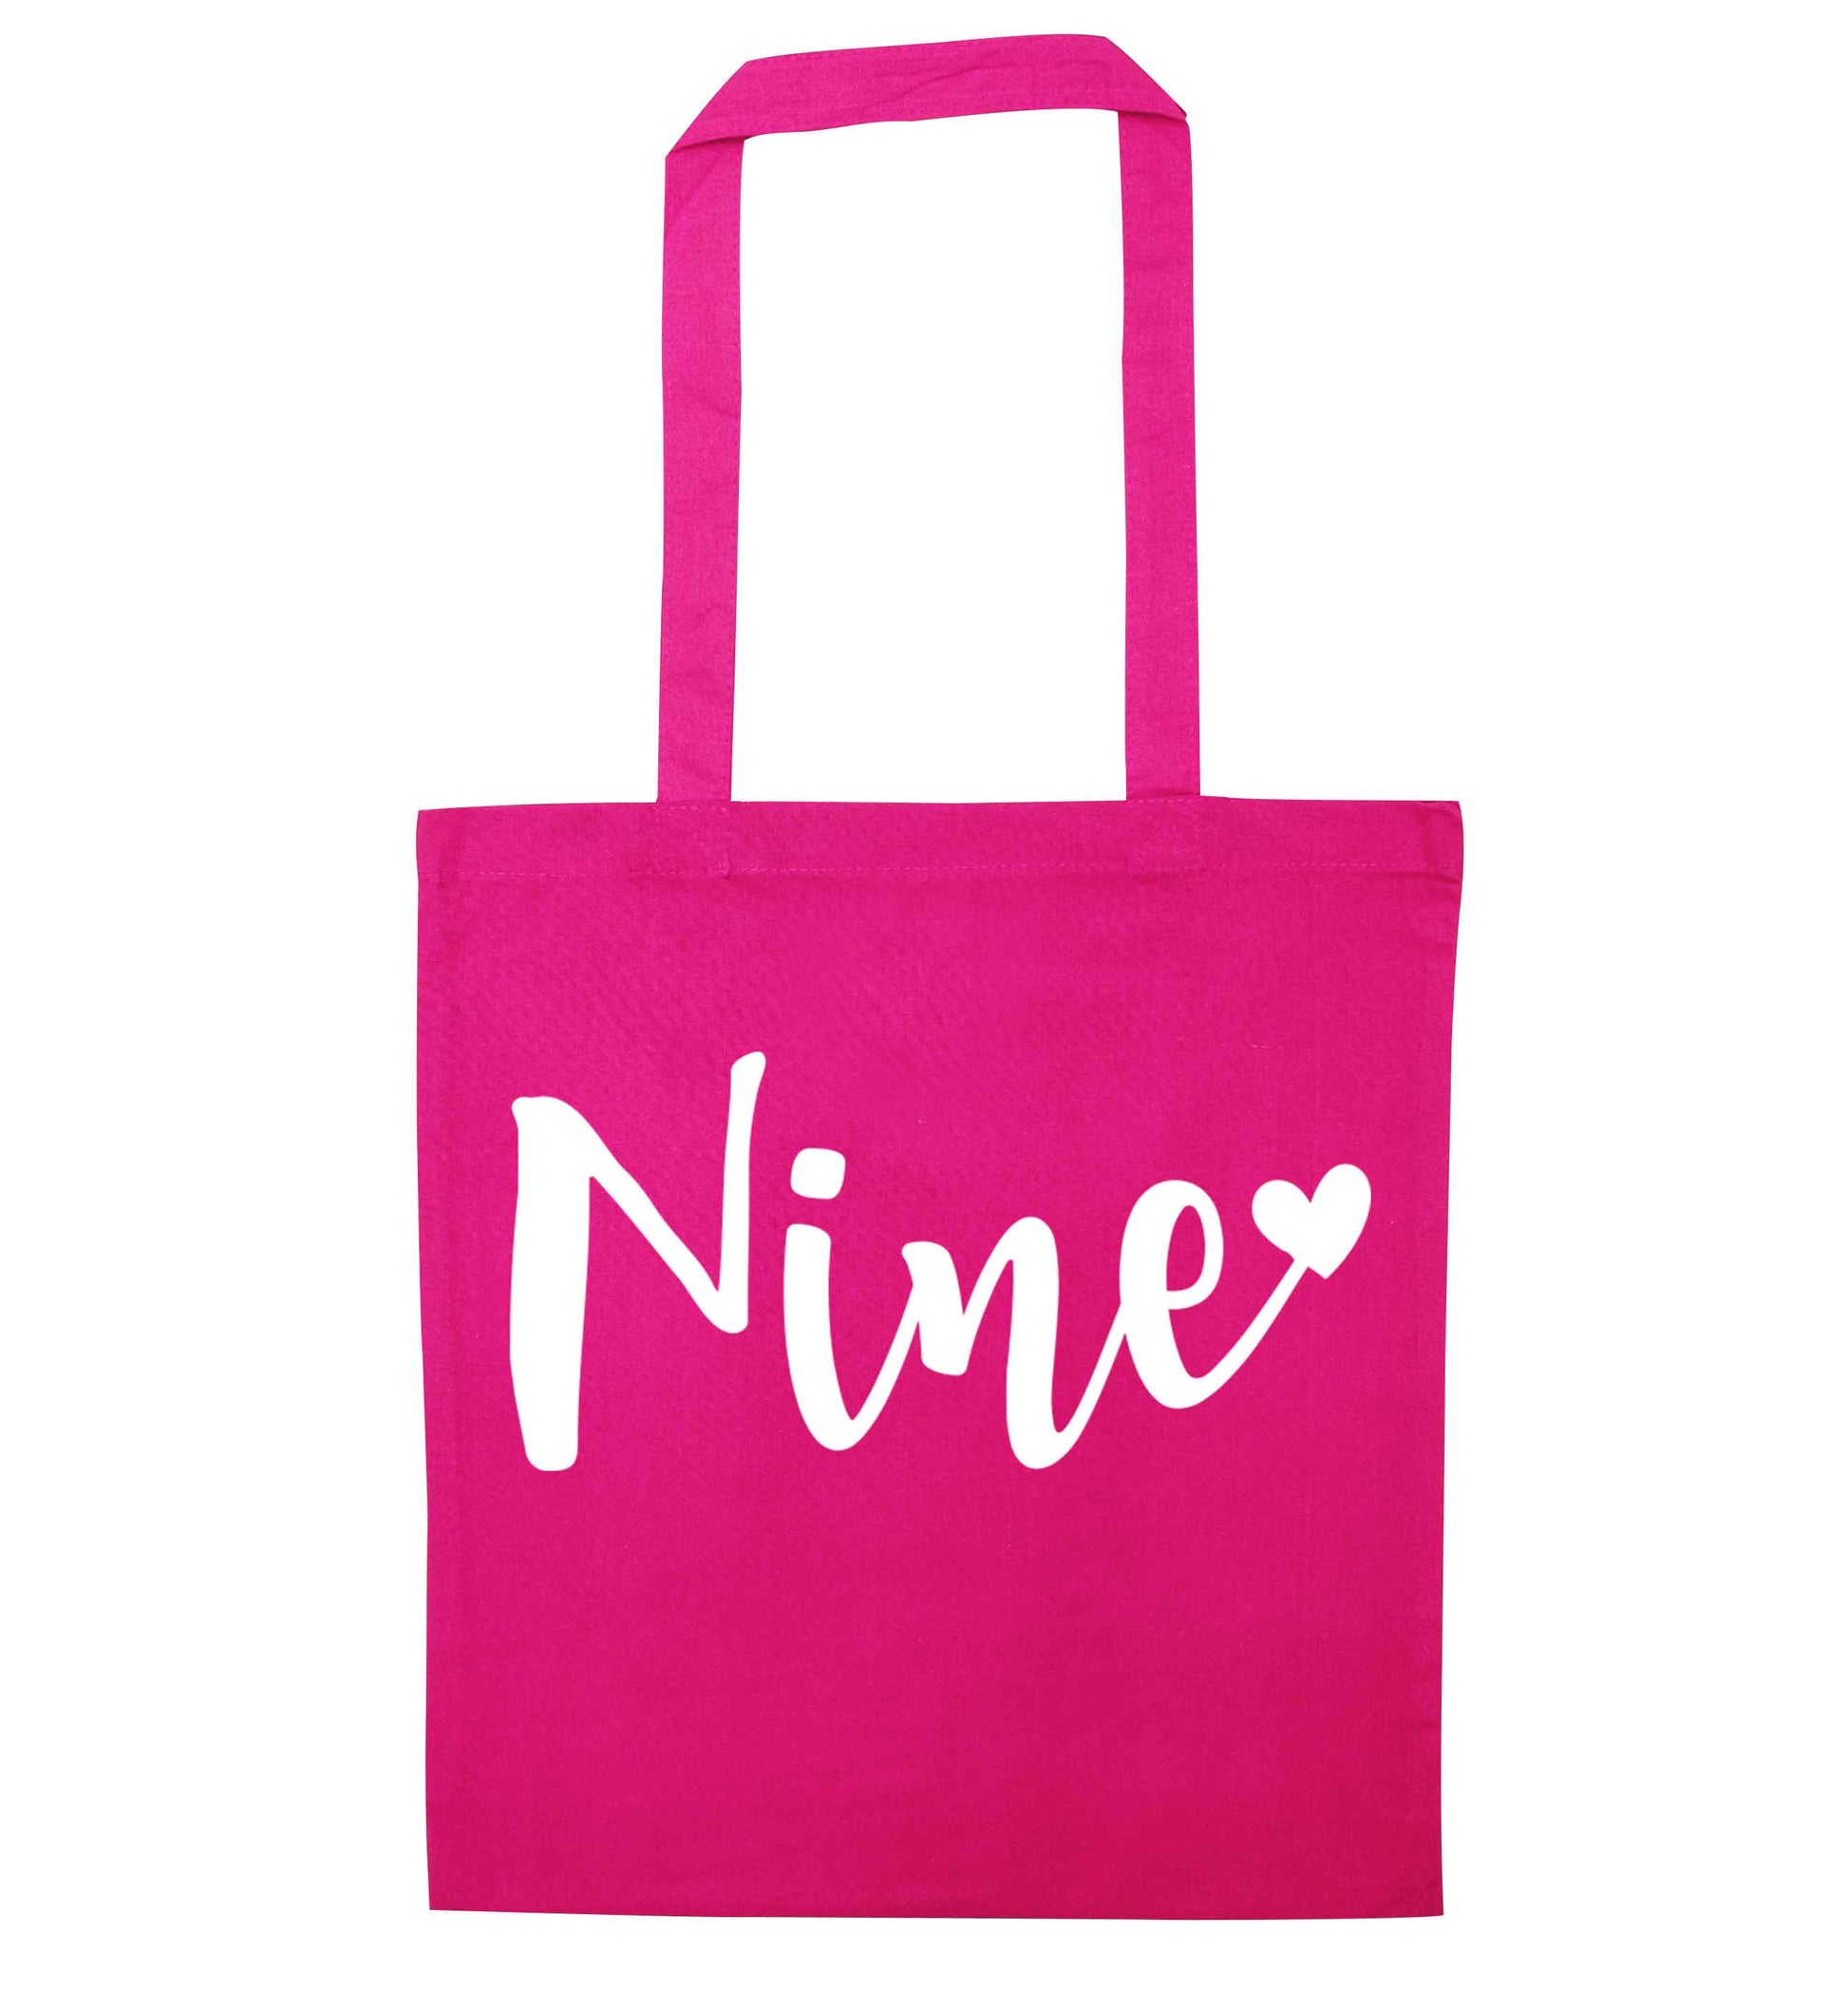 Nine and heart pink tote bag